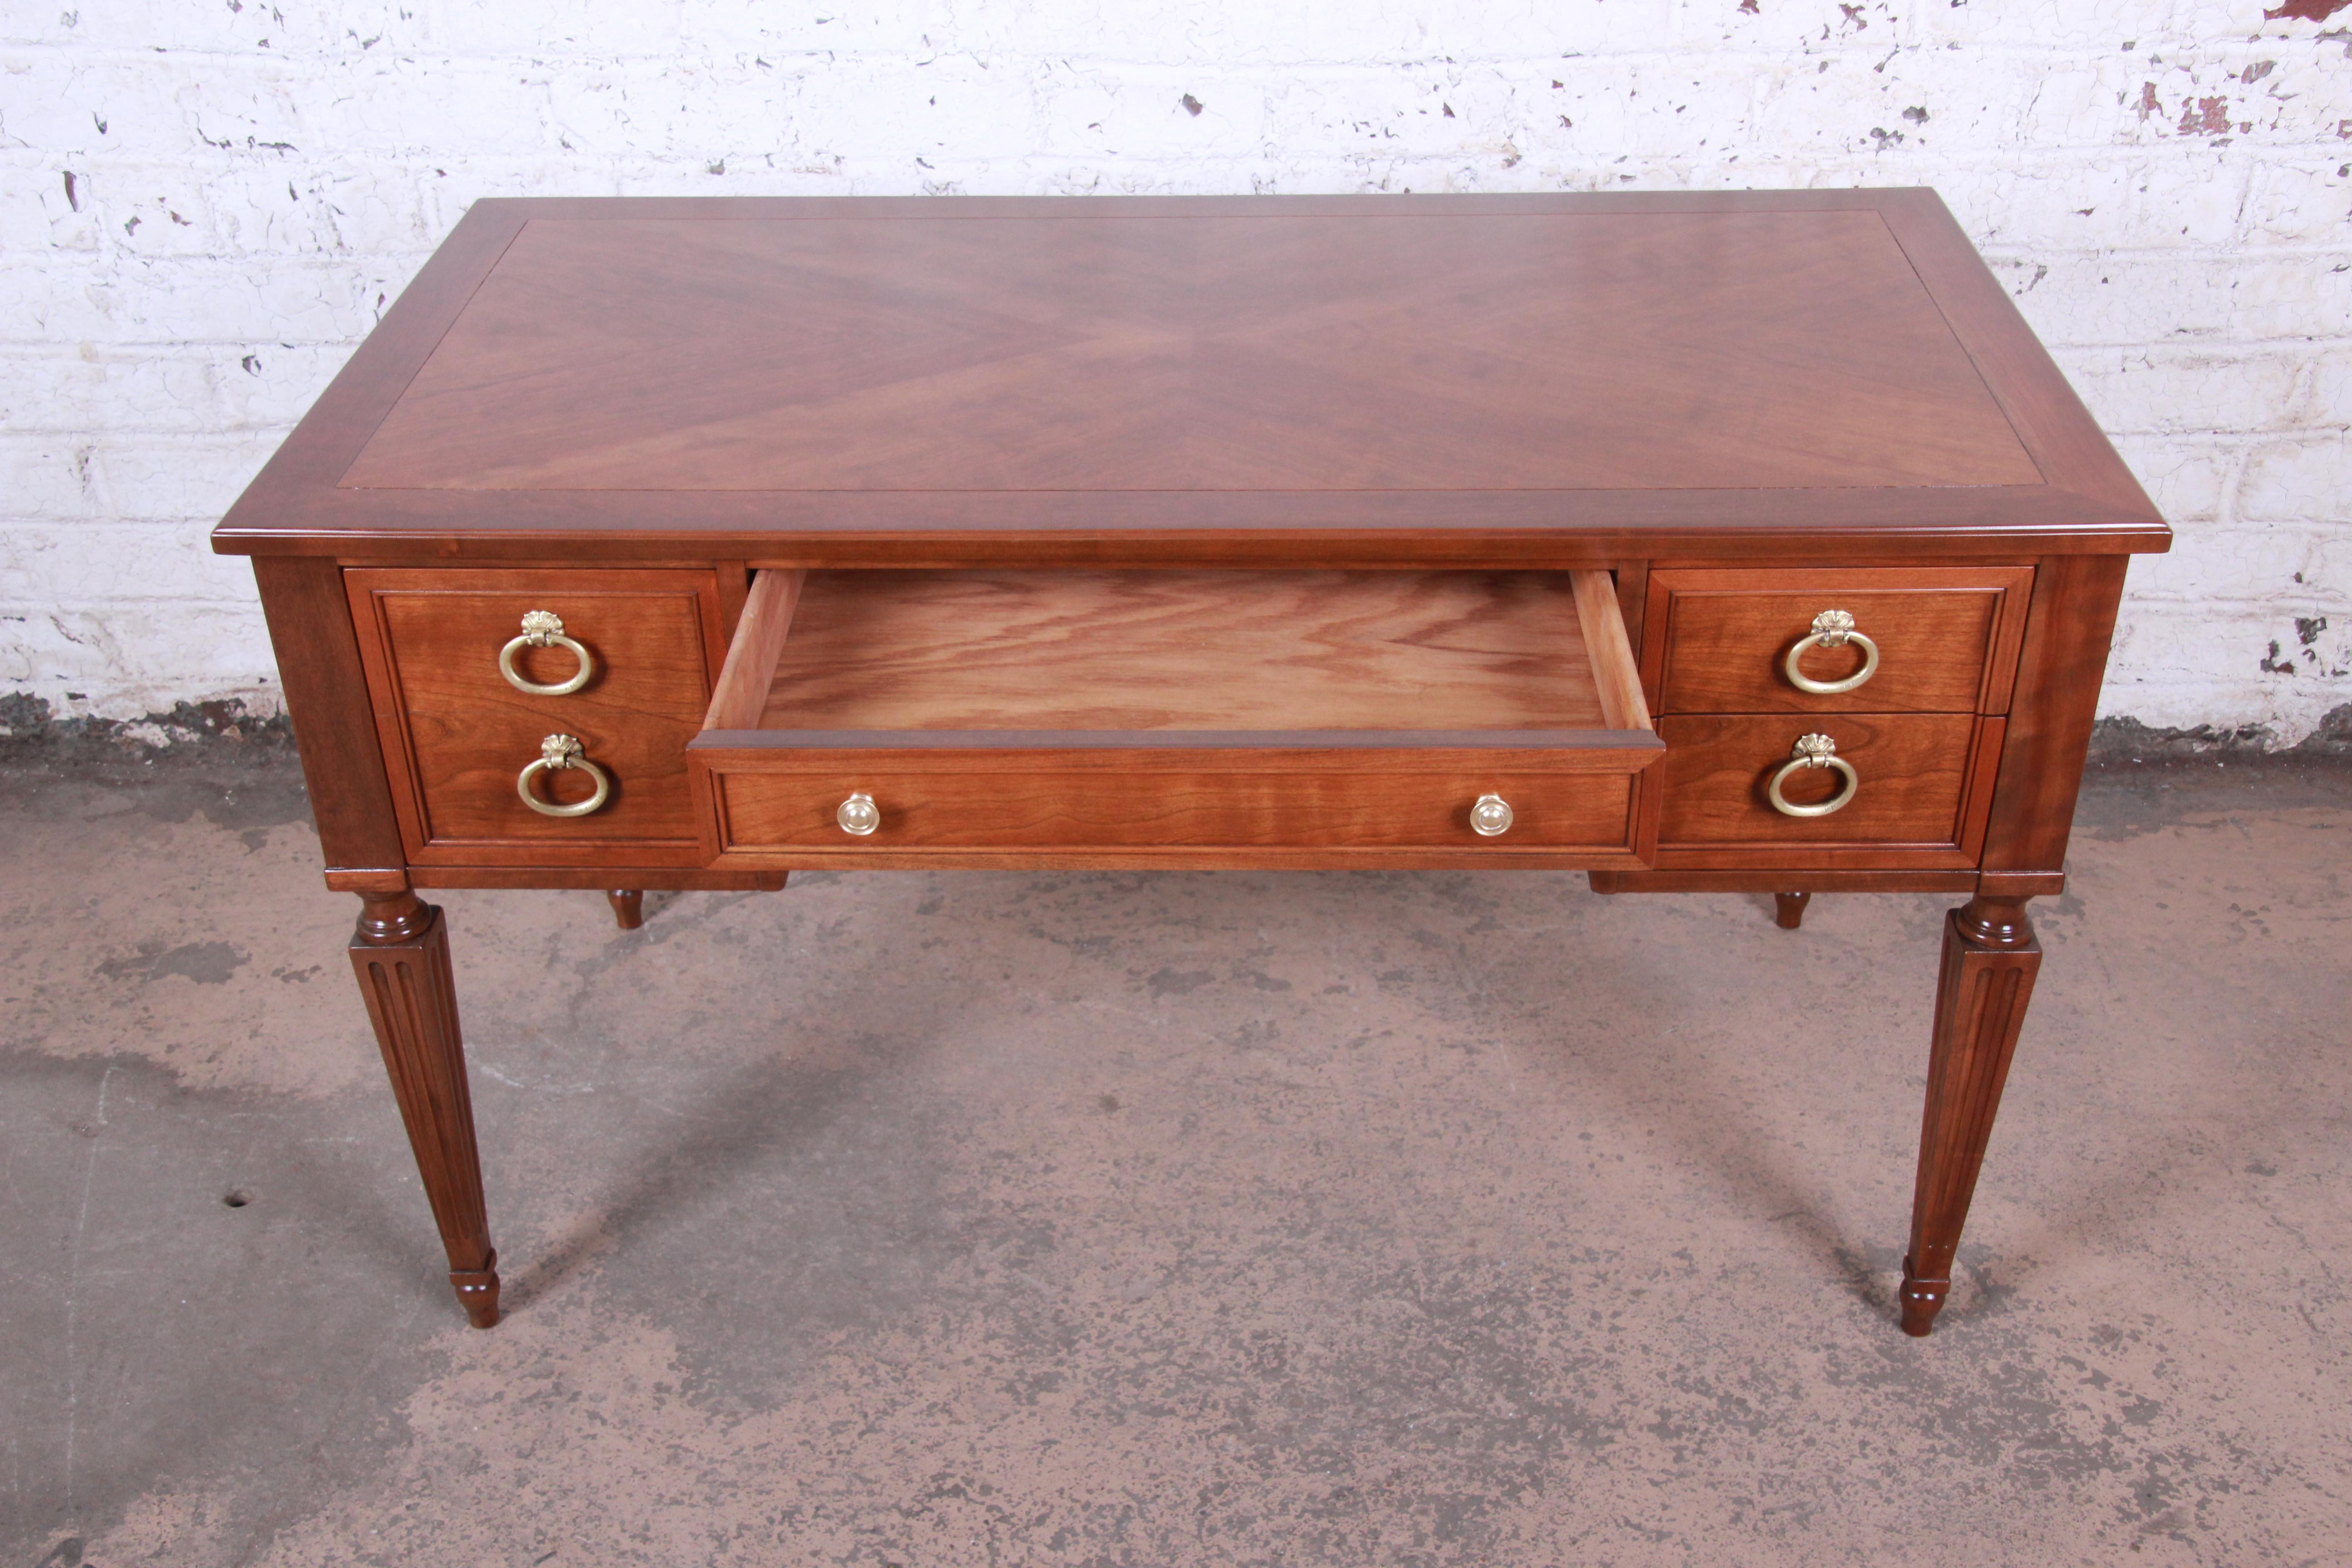 20th Century Kindel Furniture French Regency Cherry Wood Writing Desk, Newly Restored